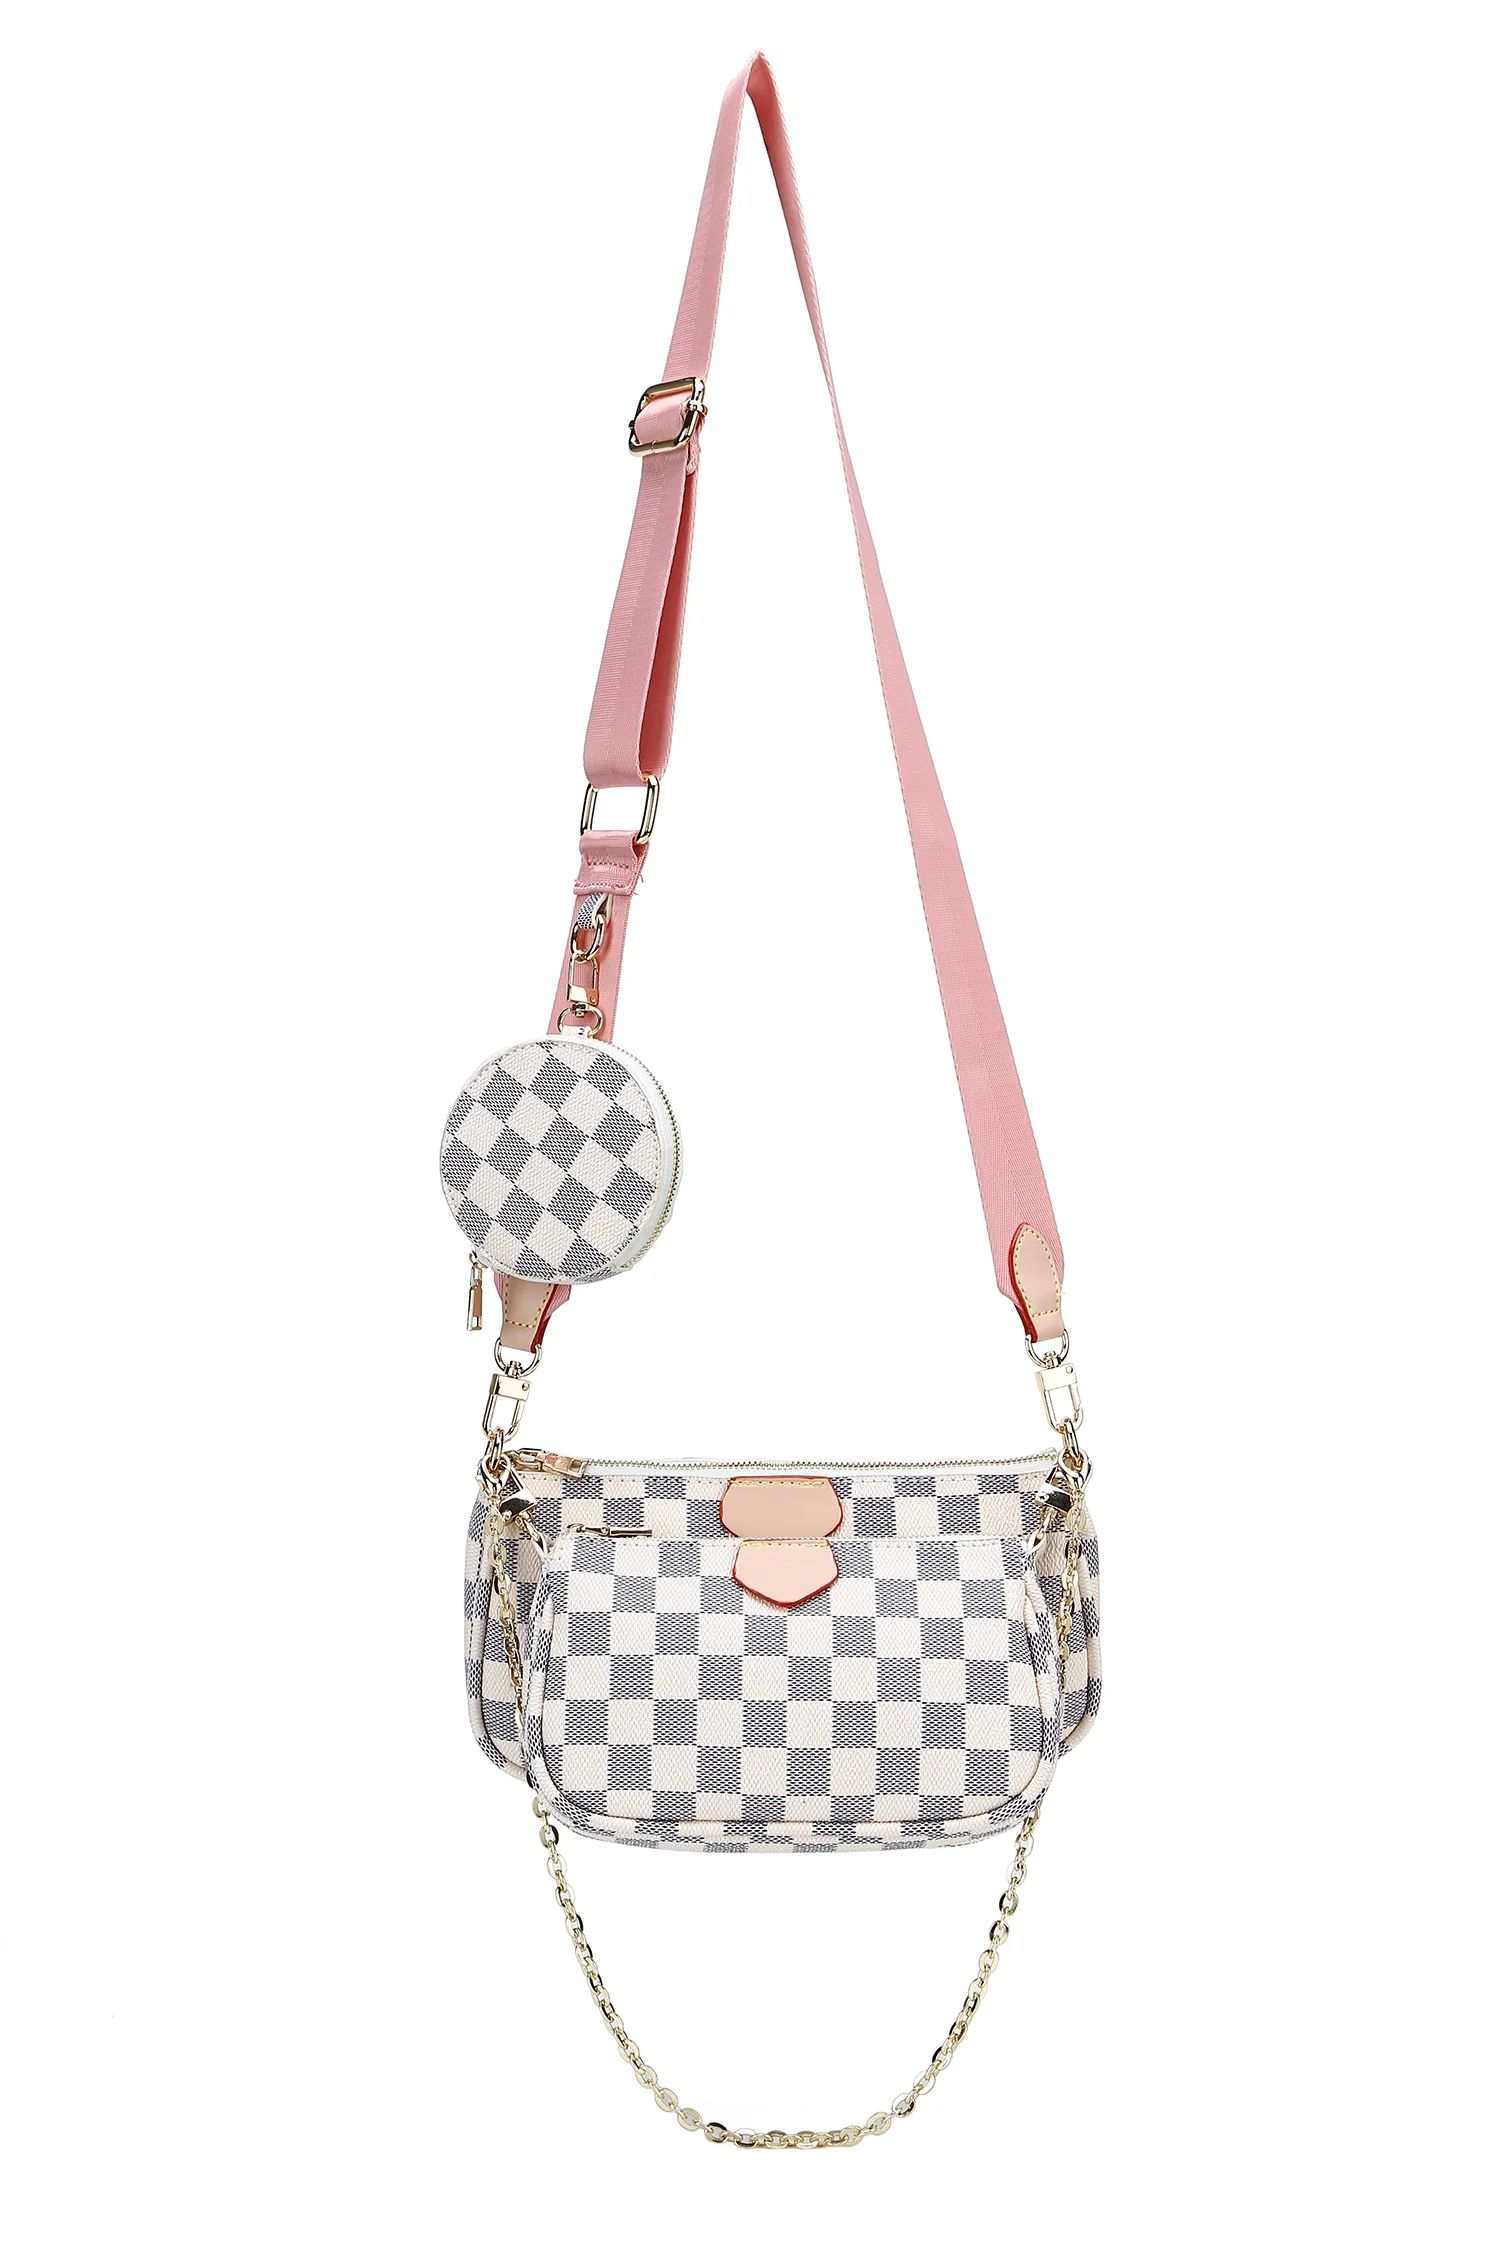 RICHPORTS Checkered Ladies Leather Shoulder Bag and Wallet Crossbody bag Ladies Handbags Casual H... | Walmart (US)